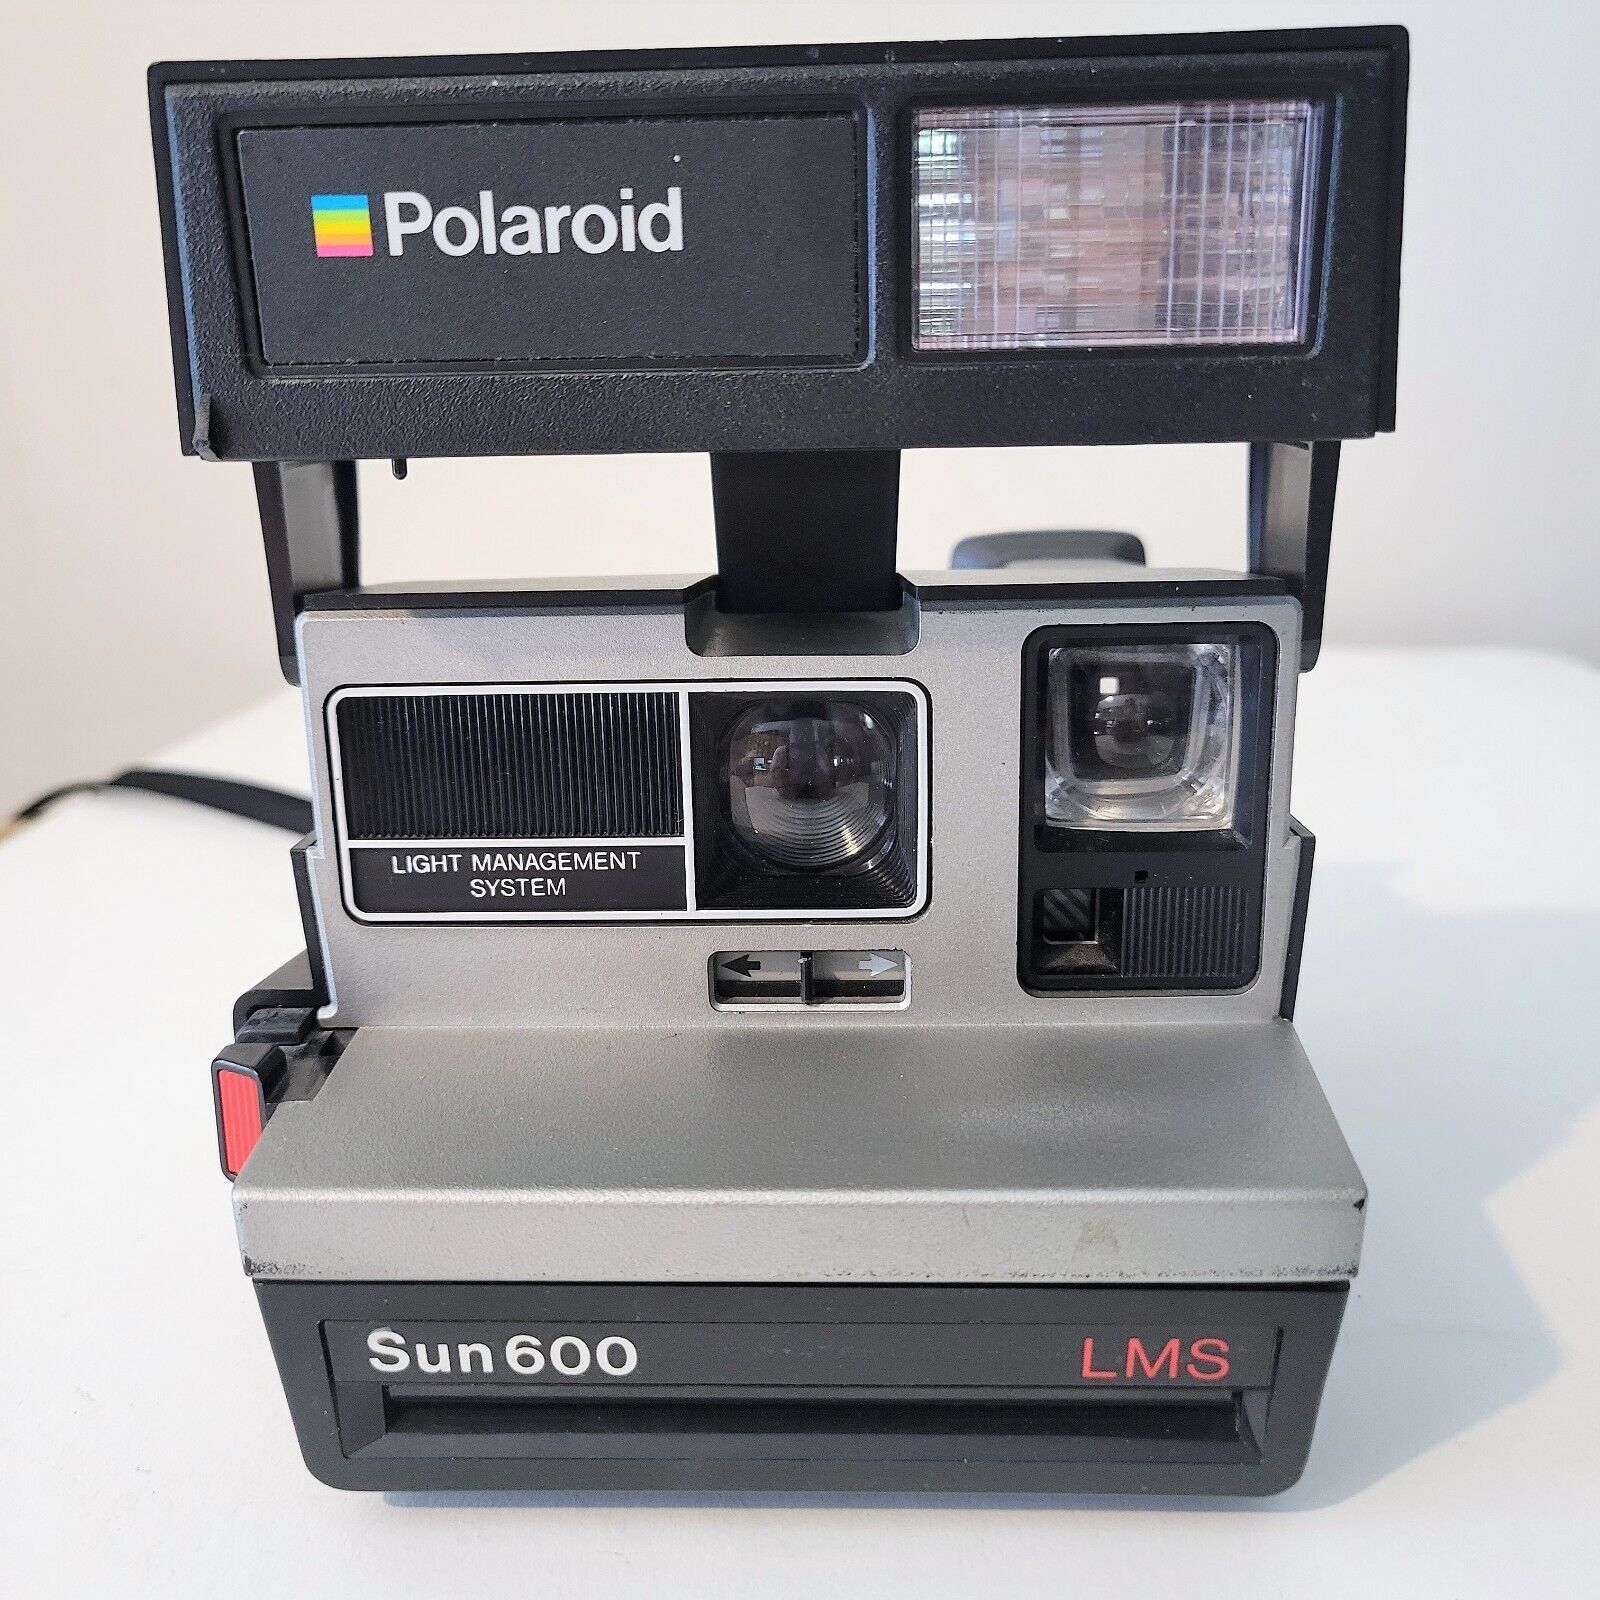 Polaroid Sun 600 LMS Instant Film Flash Land Camera Vintage -Tested - Works EXLT - $65.41